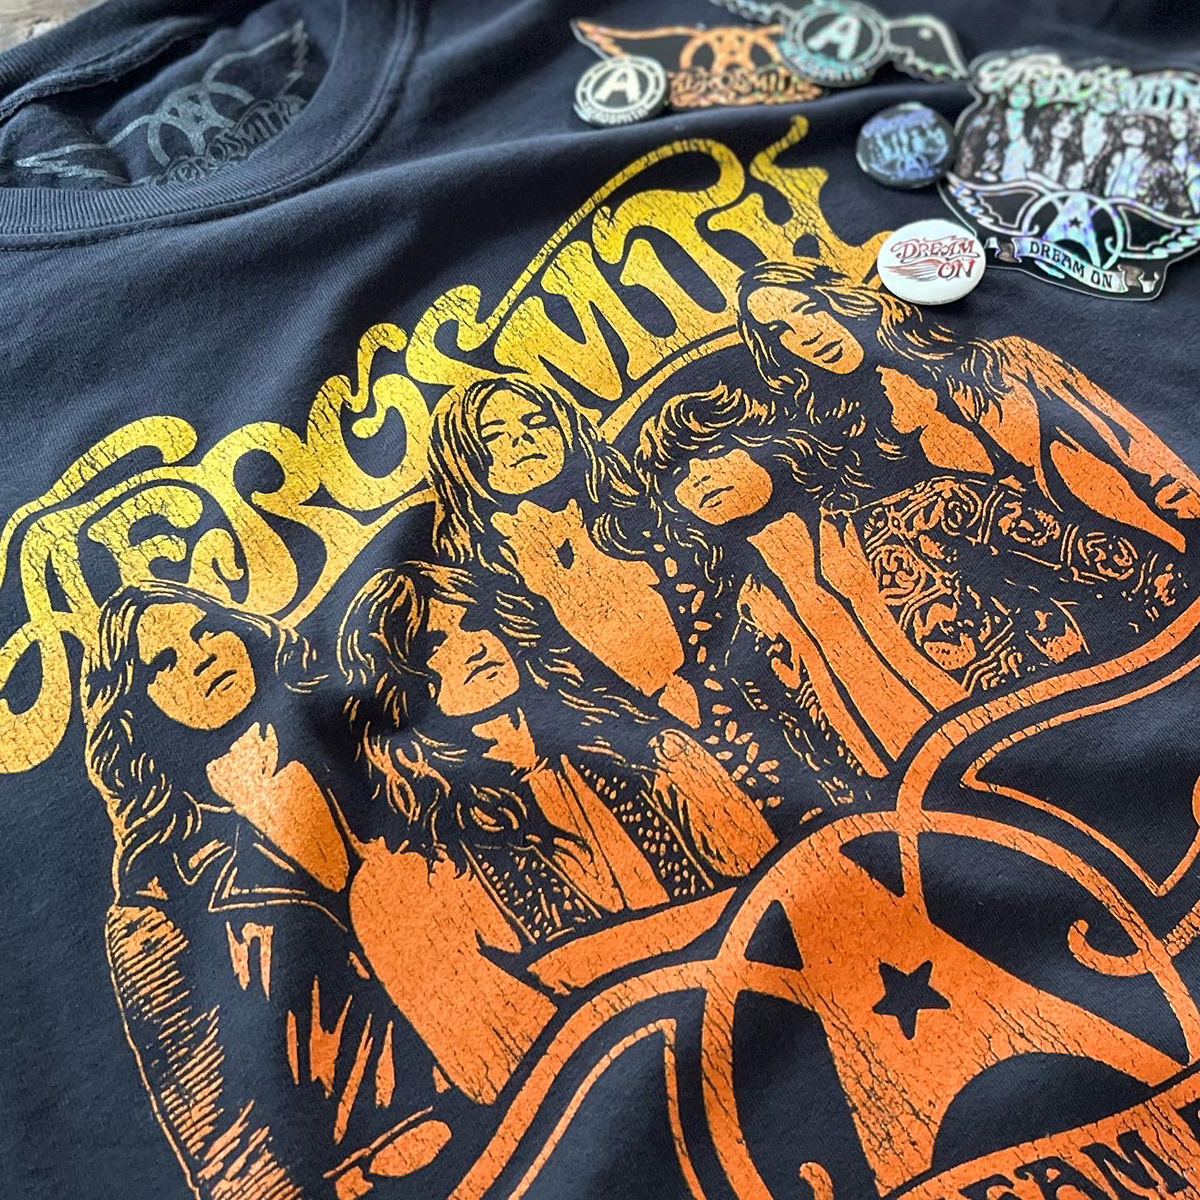 Aerosmith Aerosmith t-shirt band merch band t-shirt band tee concert merchandise Concert T-shirt Dream On rock t-shirt rockswell